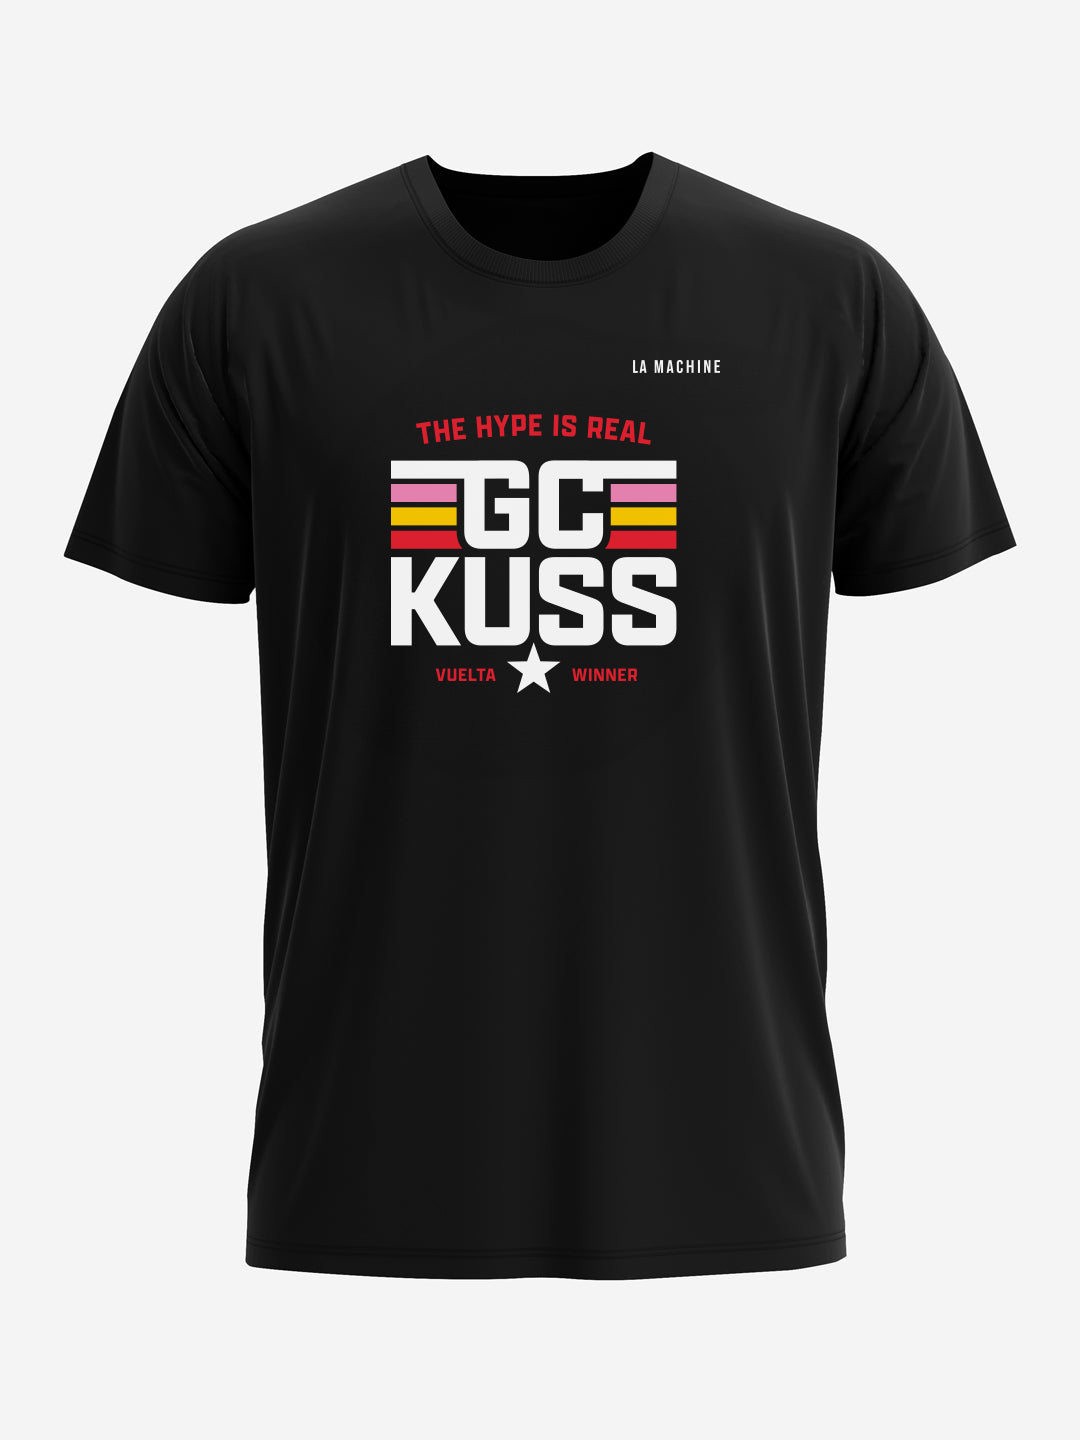 La_Machine_Team_Jumbo-Visma_Sepp_Kuss_Sepp_Kuss_T-shirt